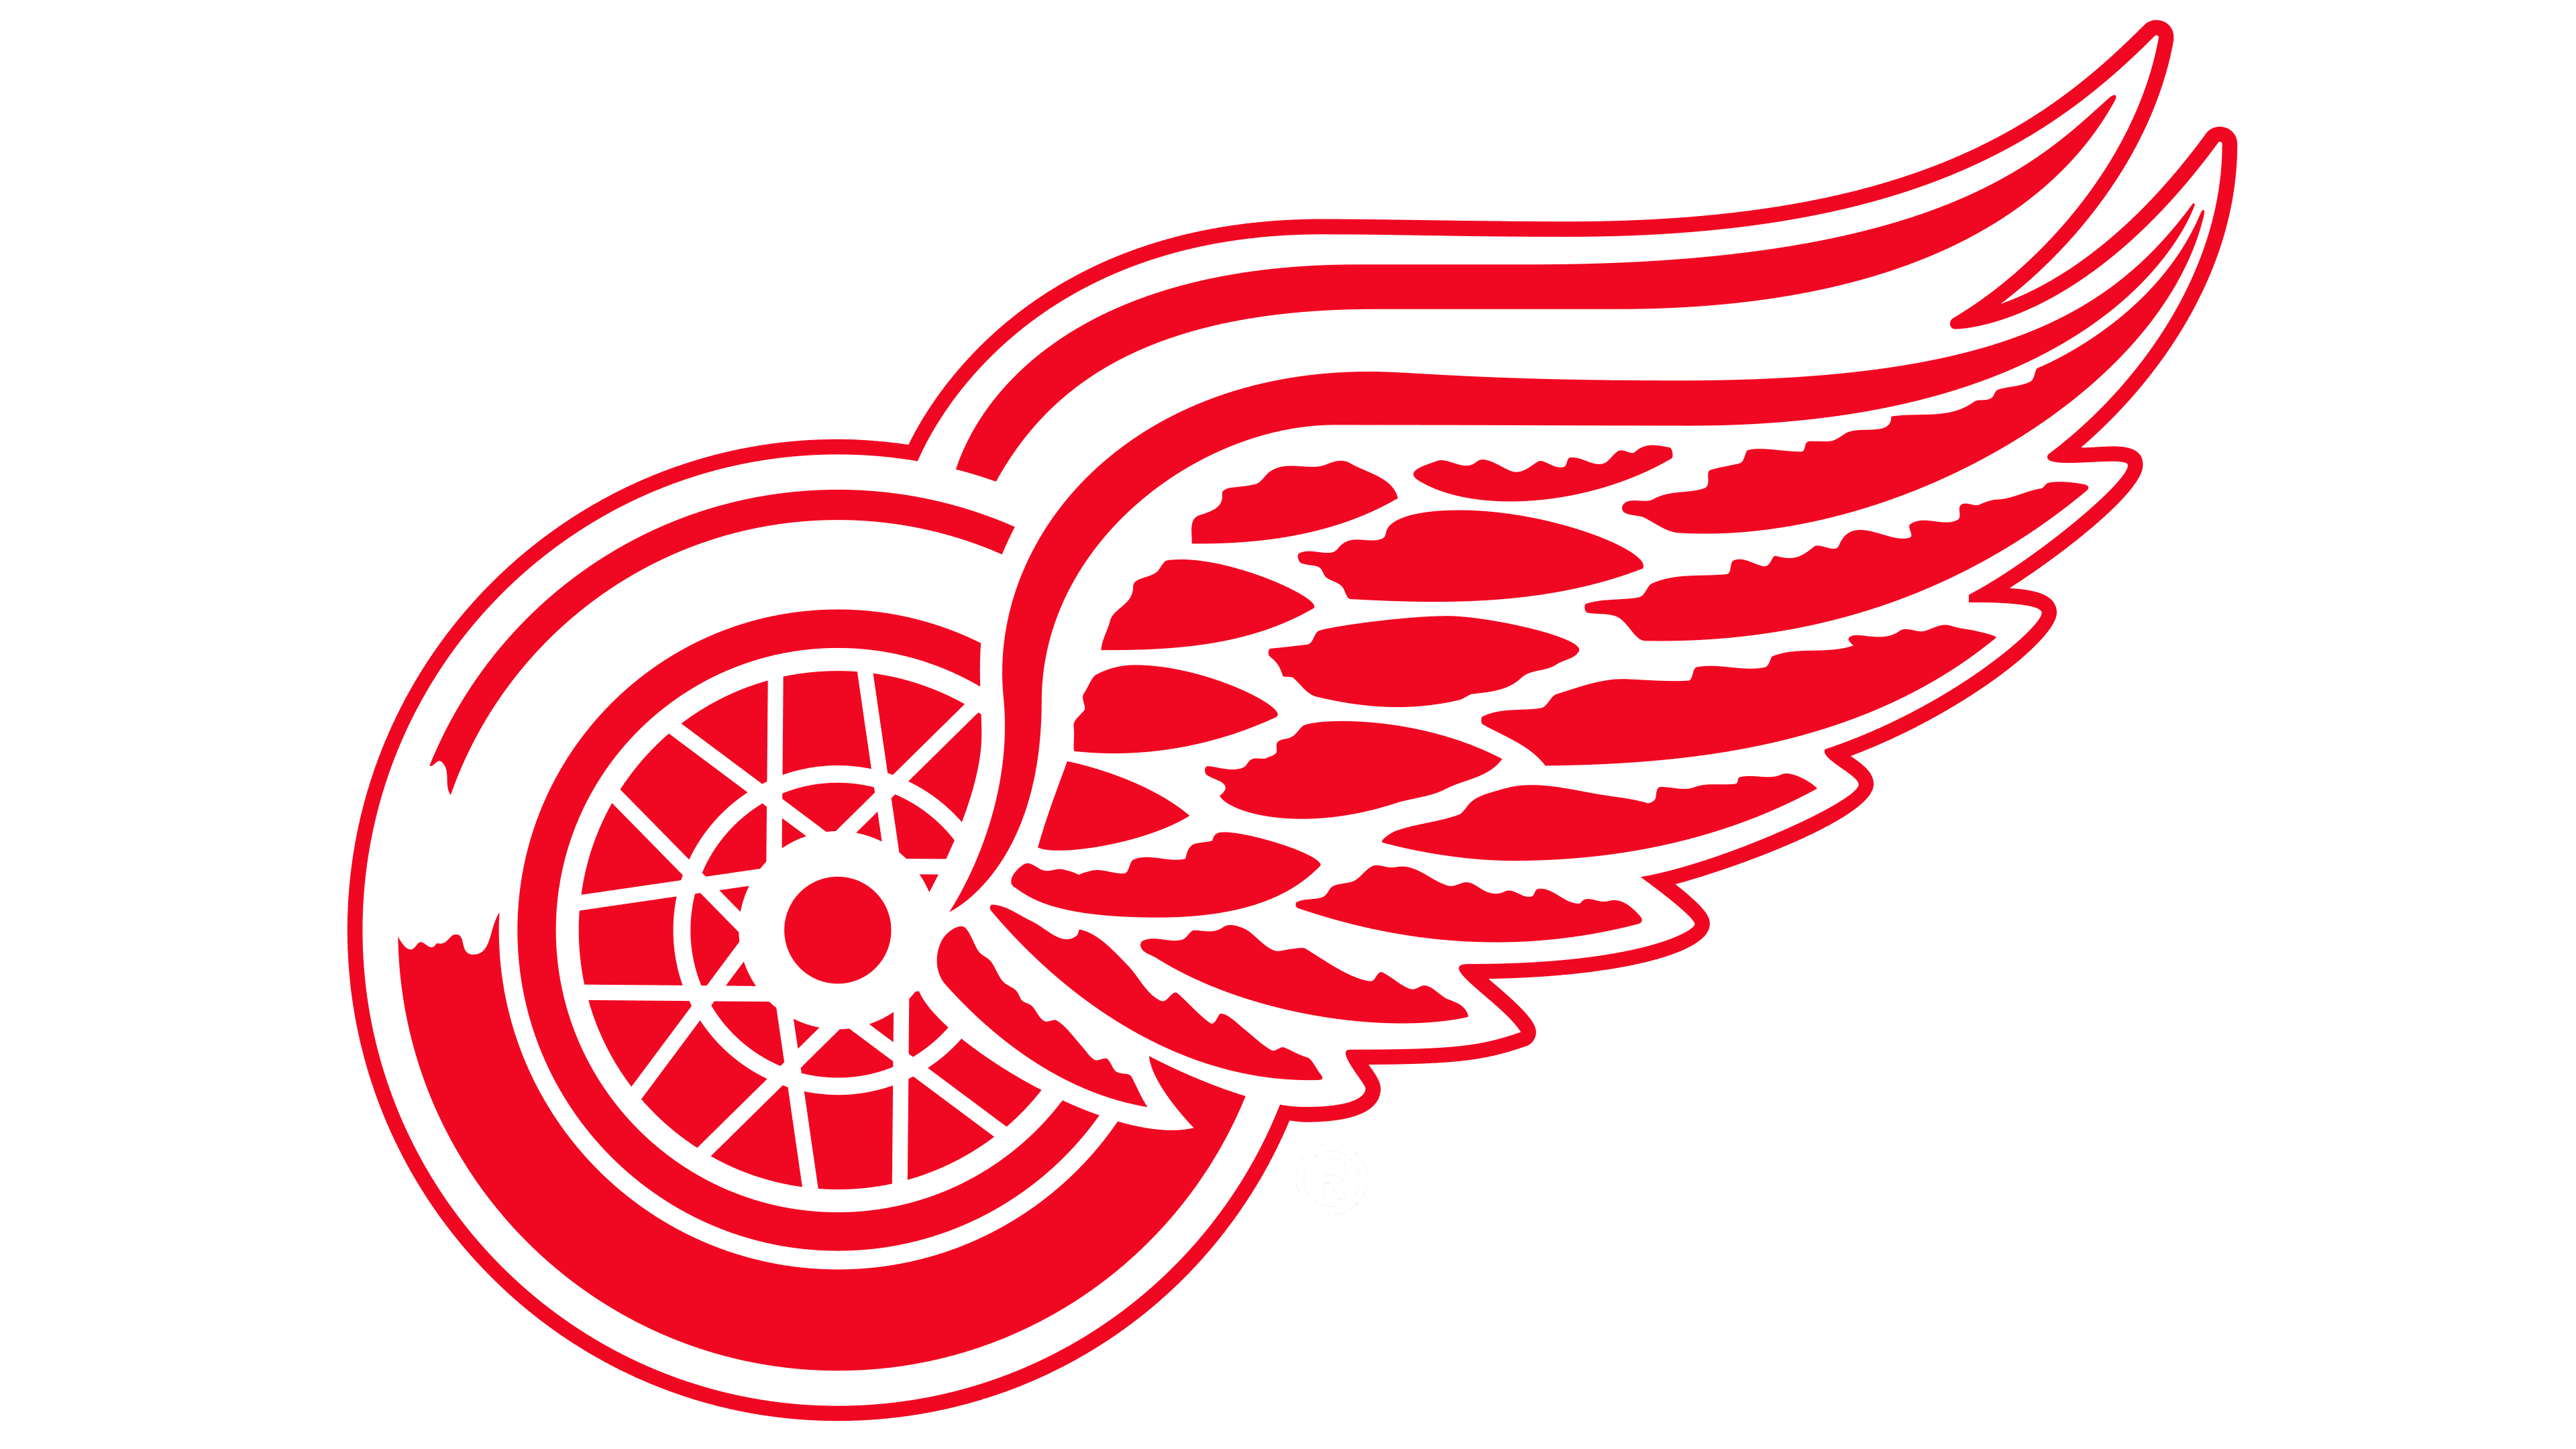 Detroit Red Wings Logo, symbol, history, brand